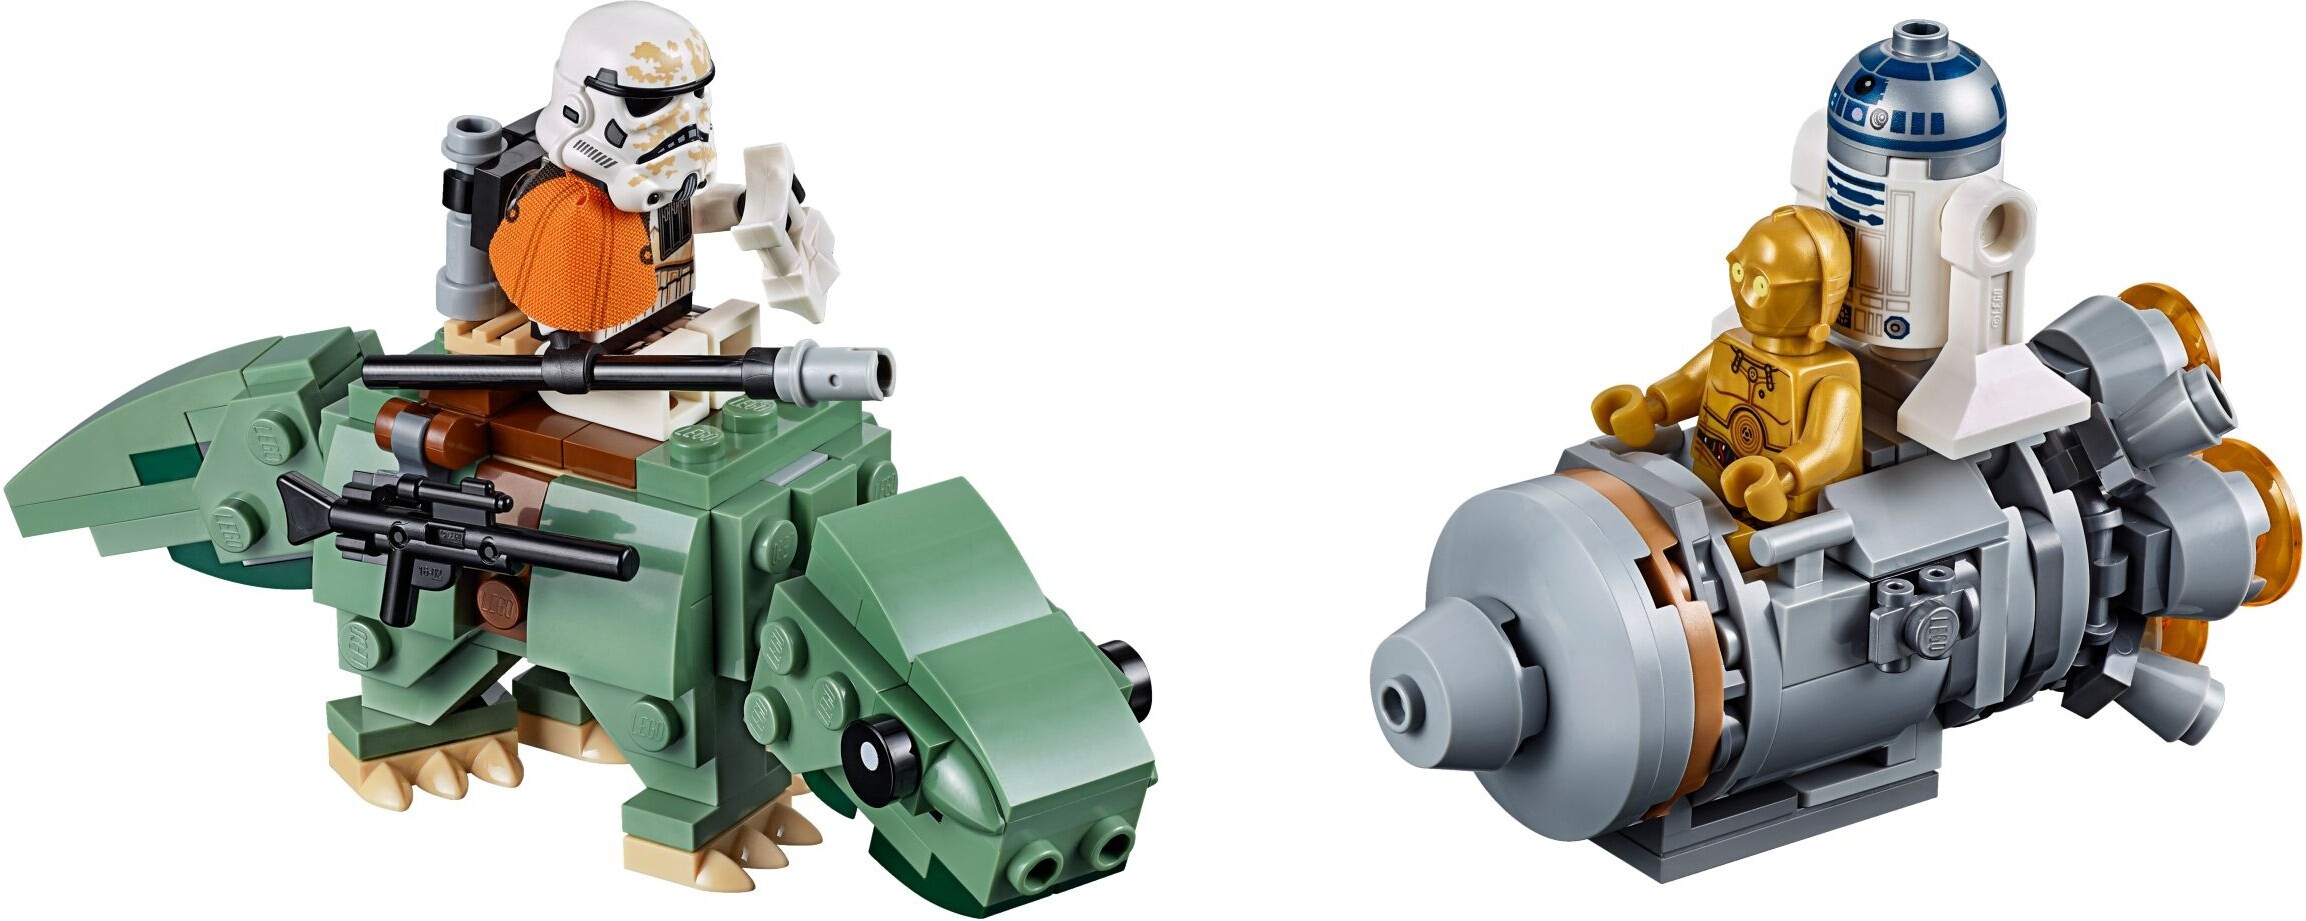 Star Wars LEGO 8008 Stormtrooper, Star Wars LEGO 8008 Storm…